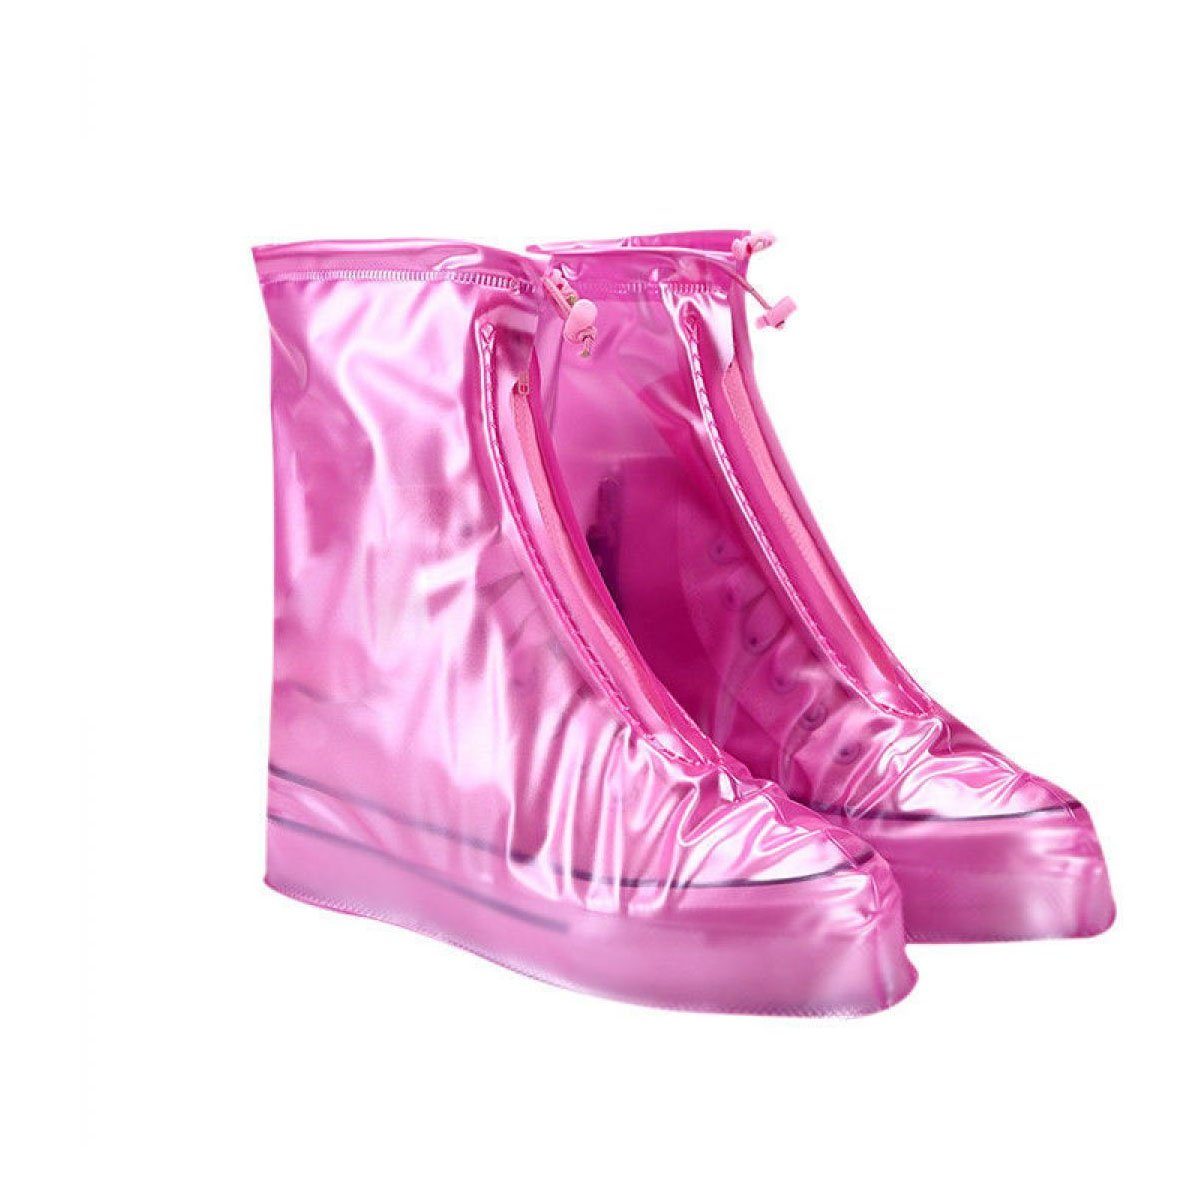 ZmdecQna Schuhüberzieher Regenschutz Schuhe,verstärkter Spitze,wasserdicht Regen rosa